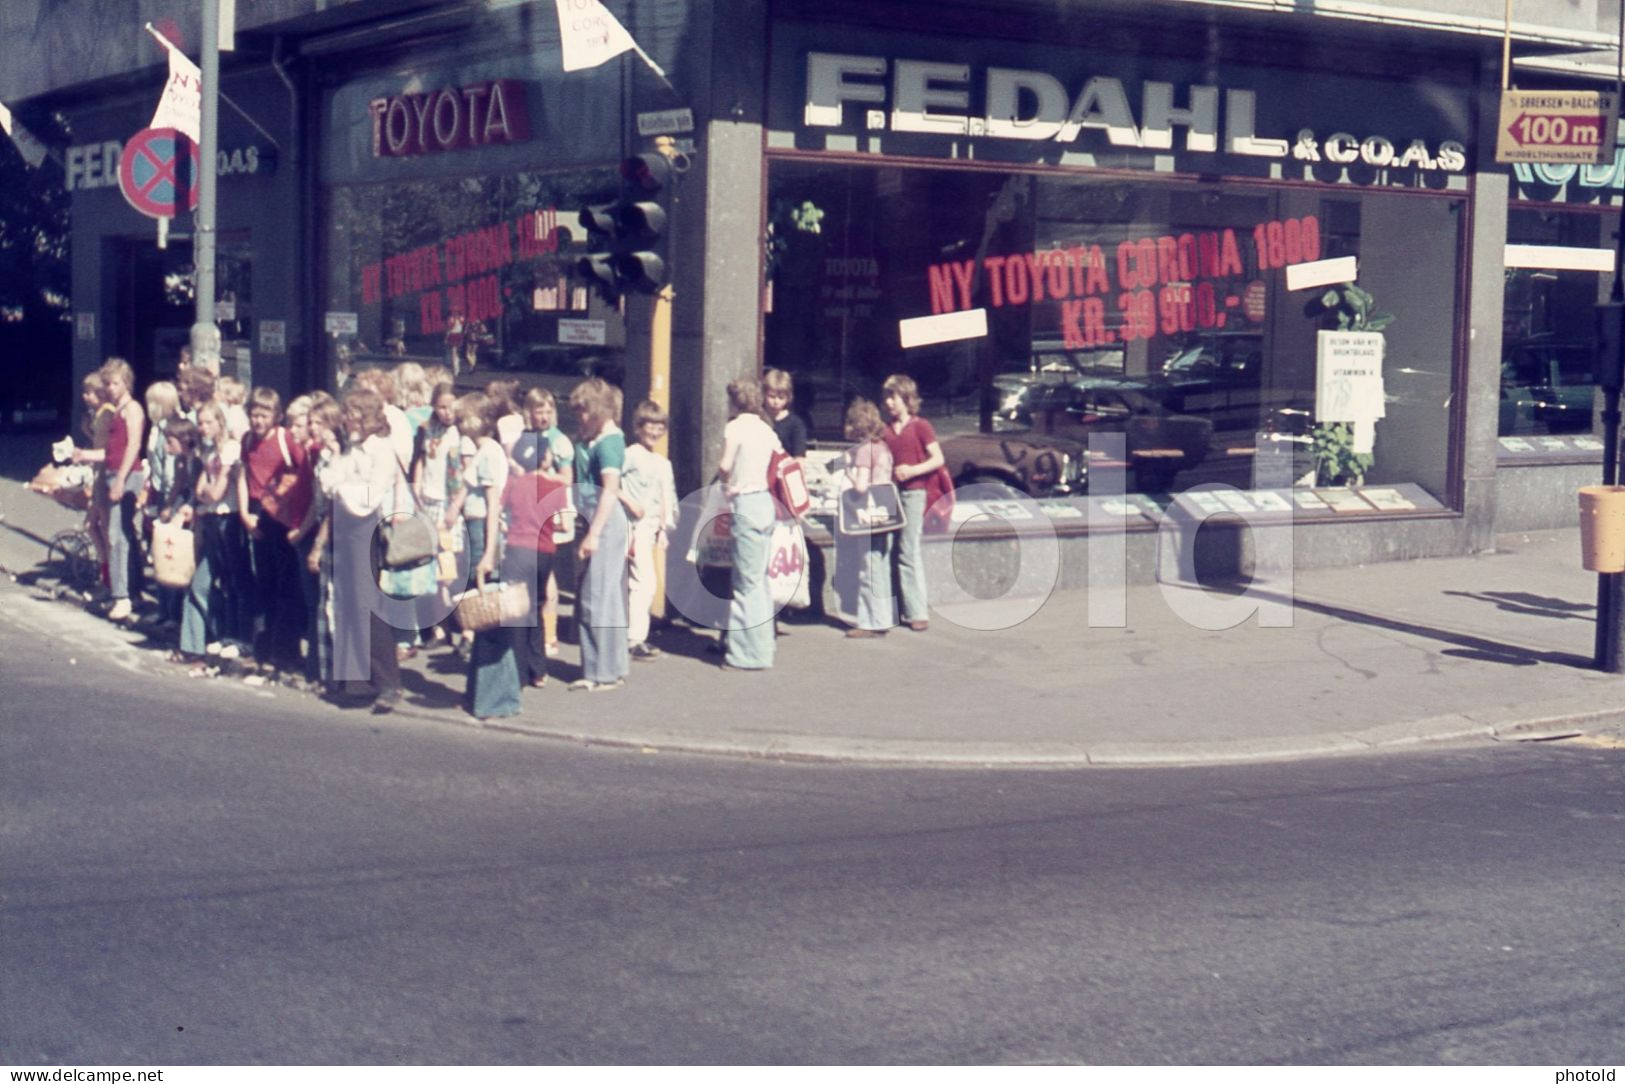 1977 F.E.DAHL TOYOTA CORONA 1600 CAR STAND OSLO NORGE AMATEUR 35mm DIAPOSITIVE SLIDE Not PHOTO No FOTO NB4109 - Diapositives